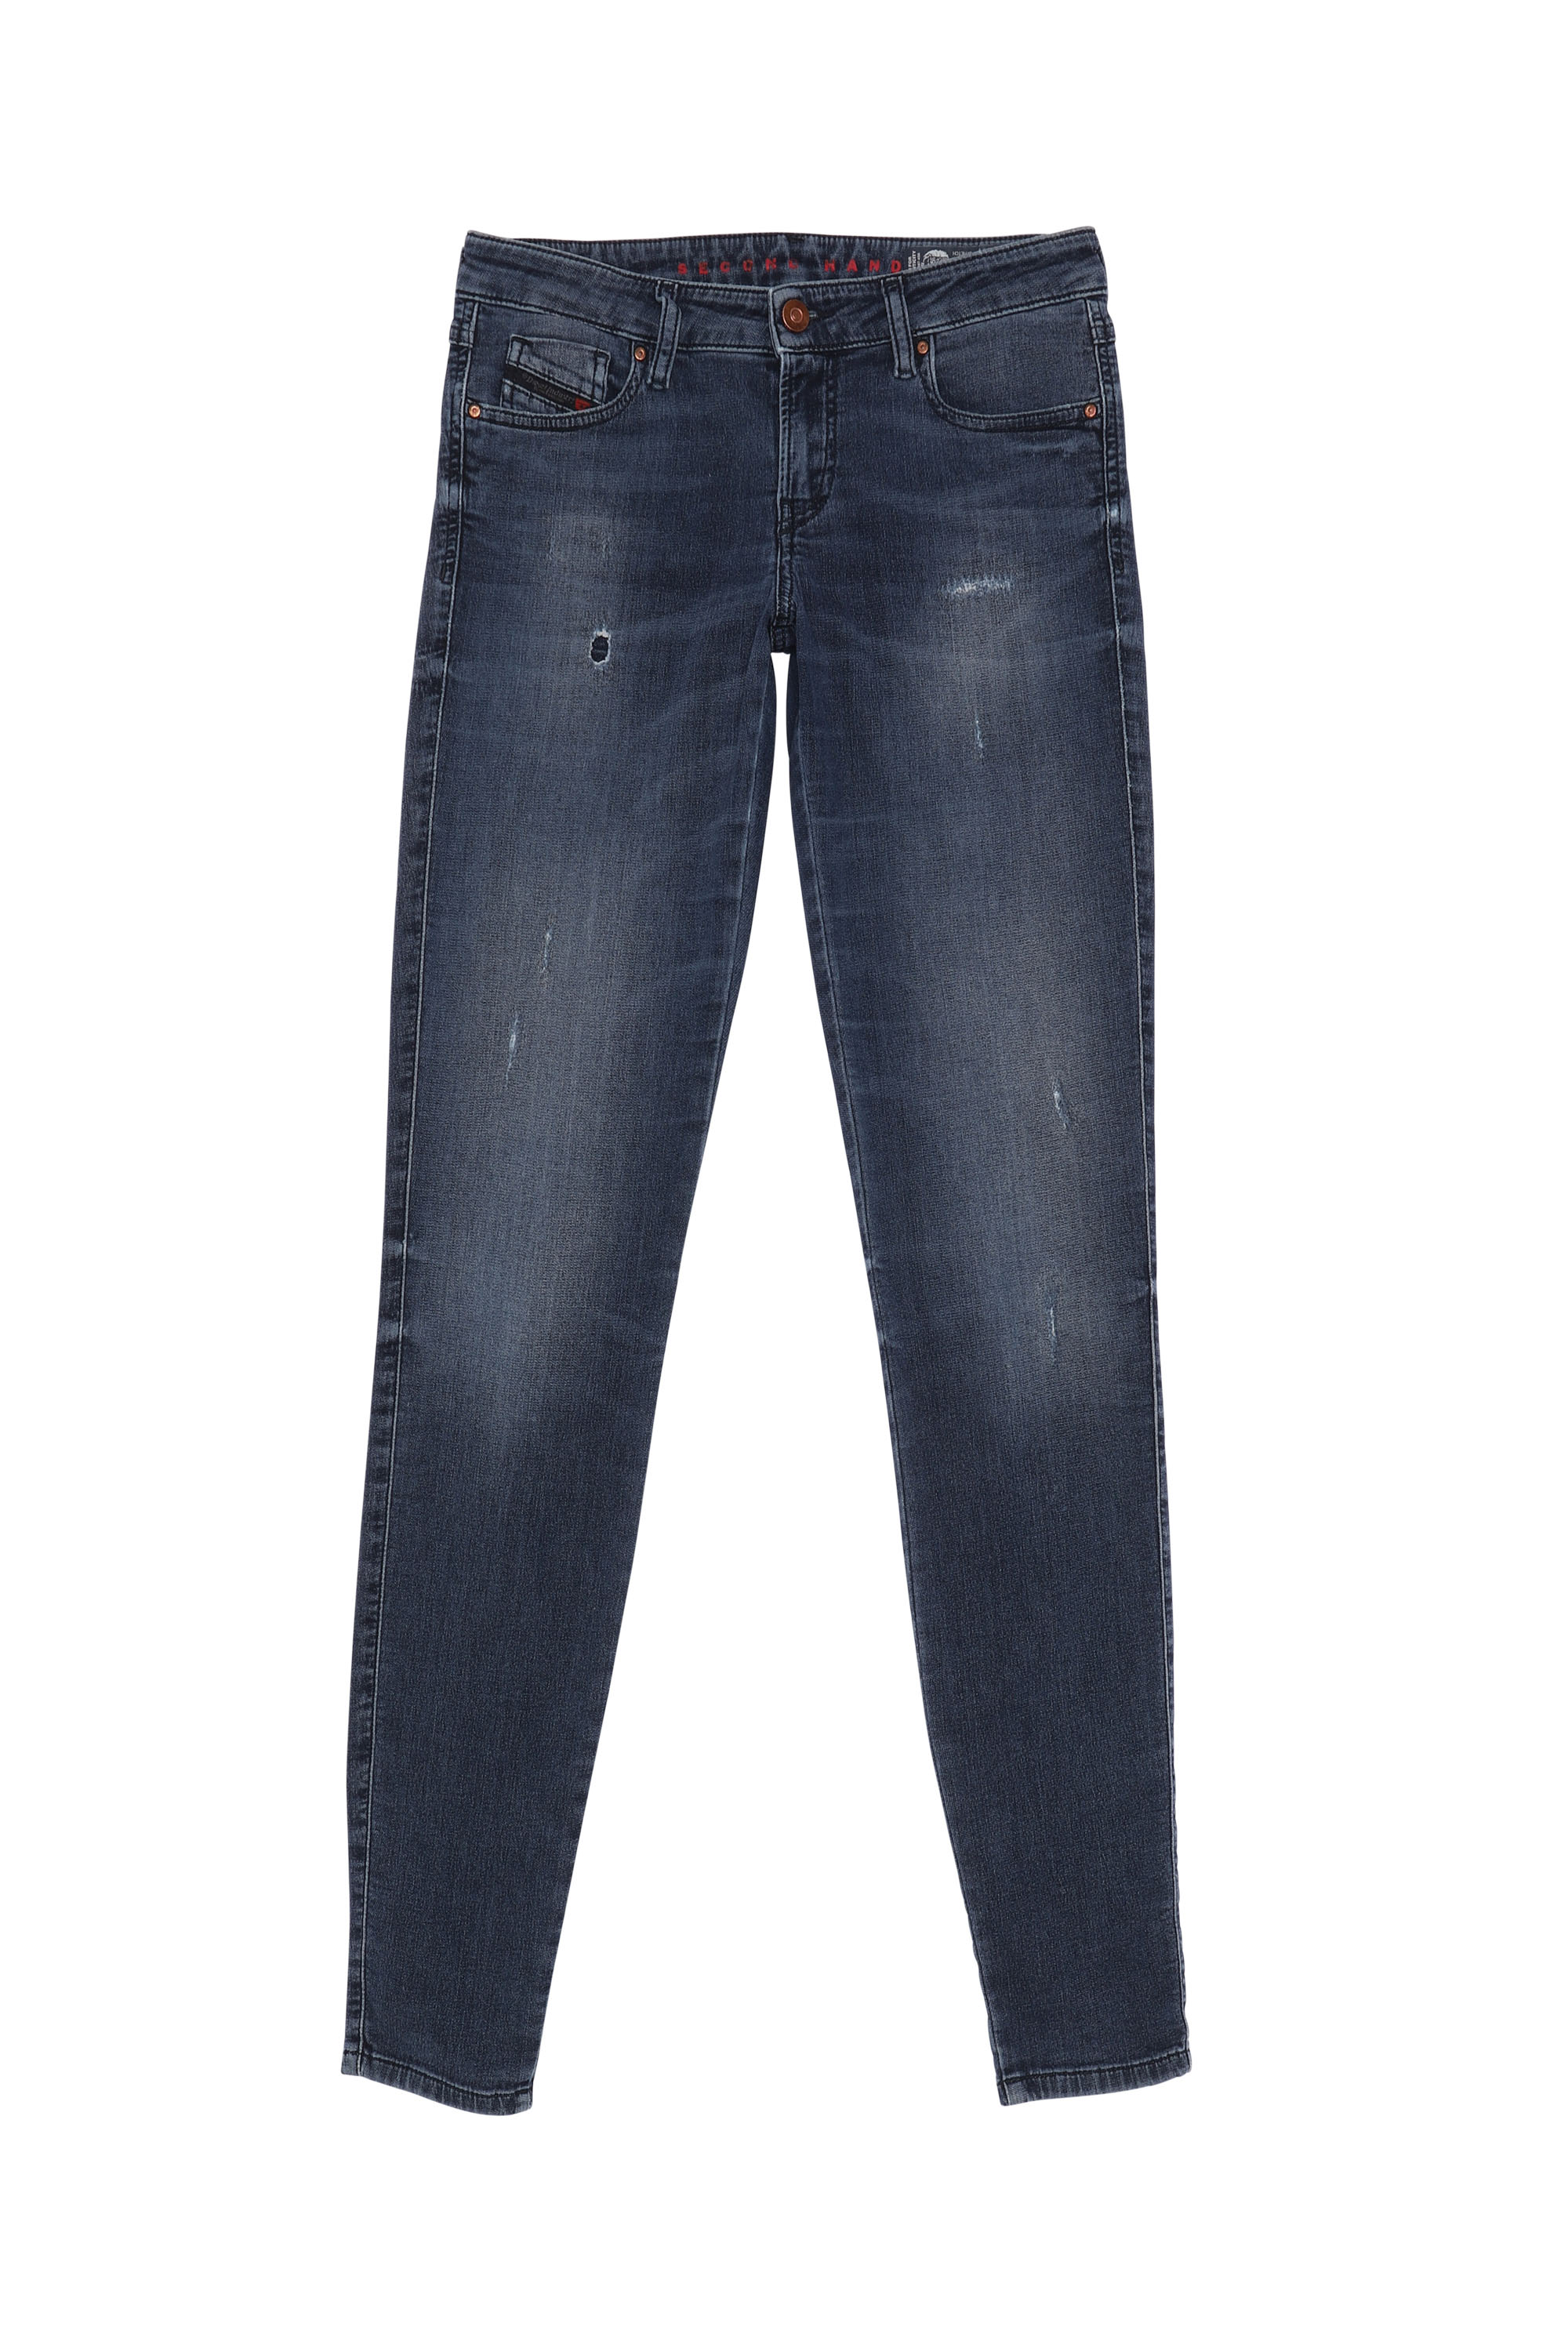 GRACEY JoggJeans®, Dark Blue - Jeans